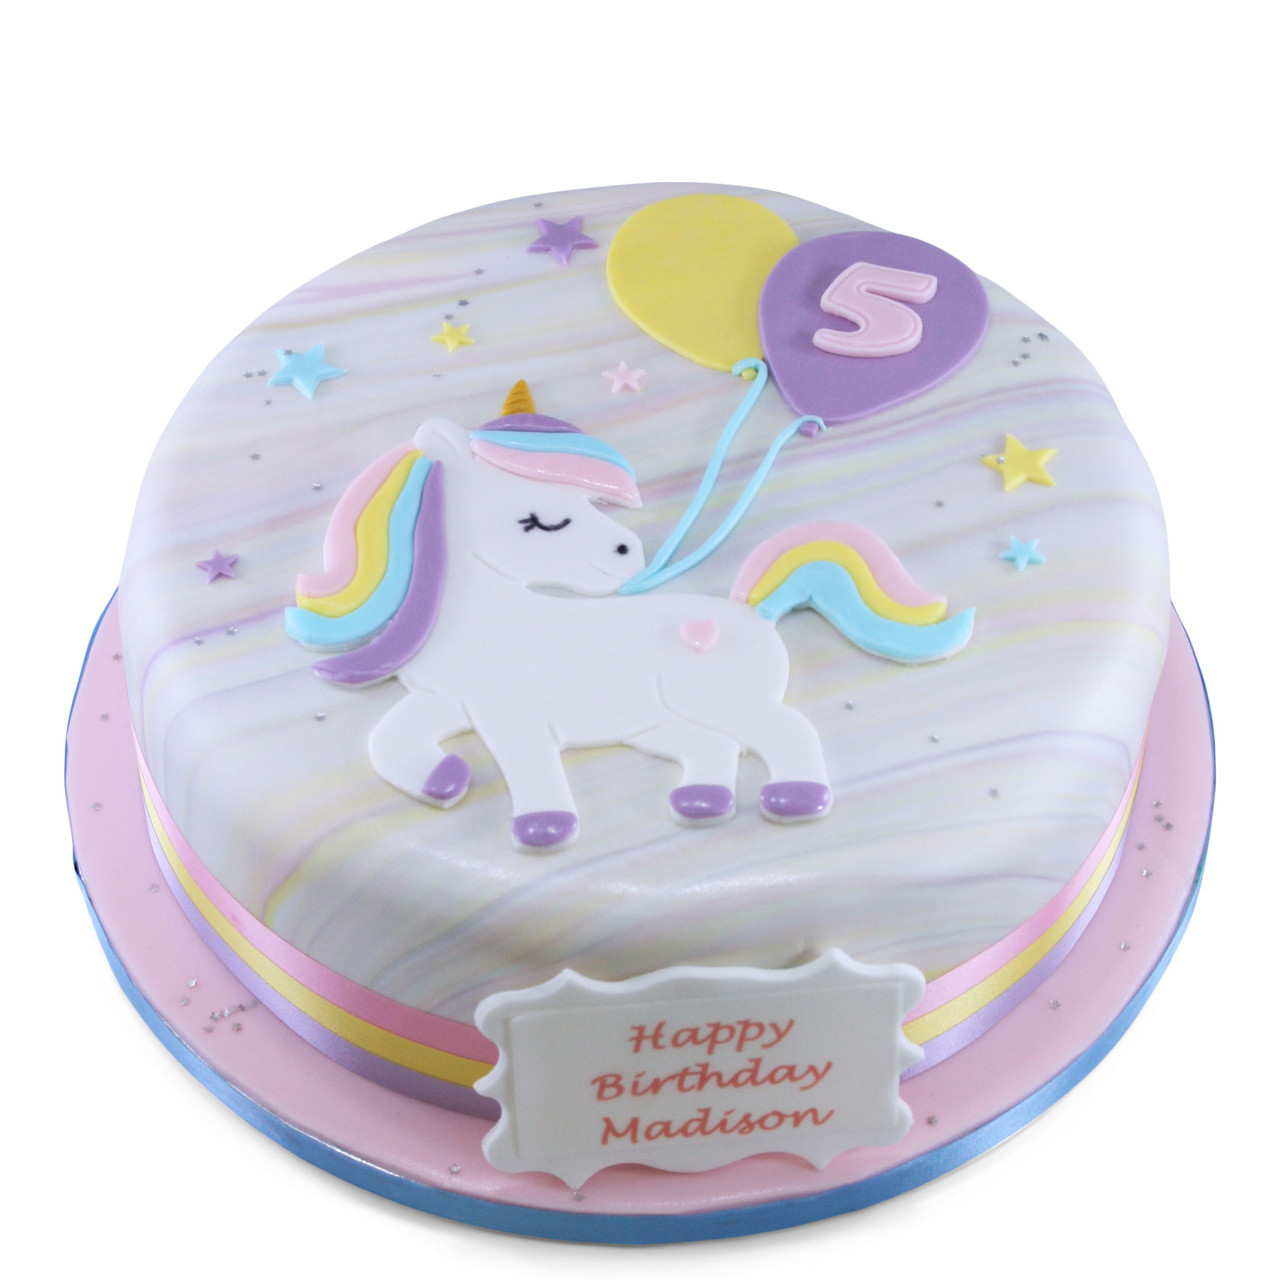 Unicorn cakes | Buy online cakes | Tfcakes